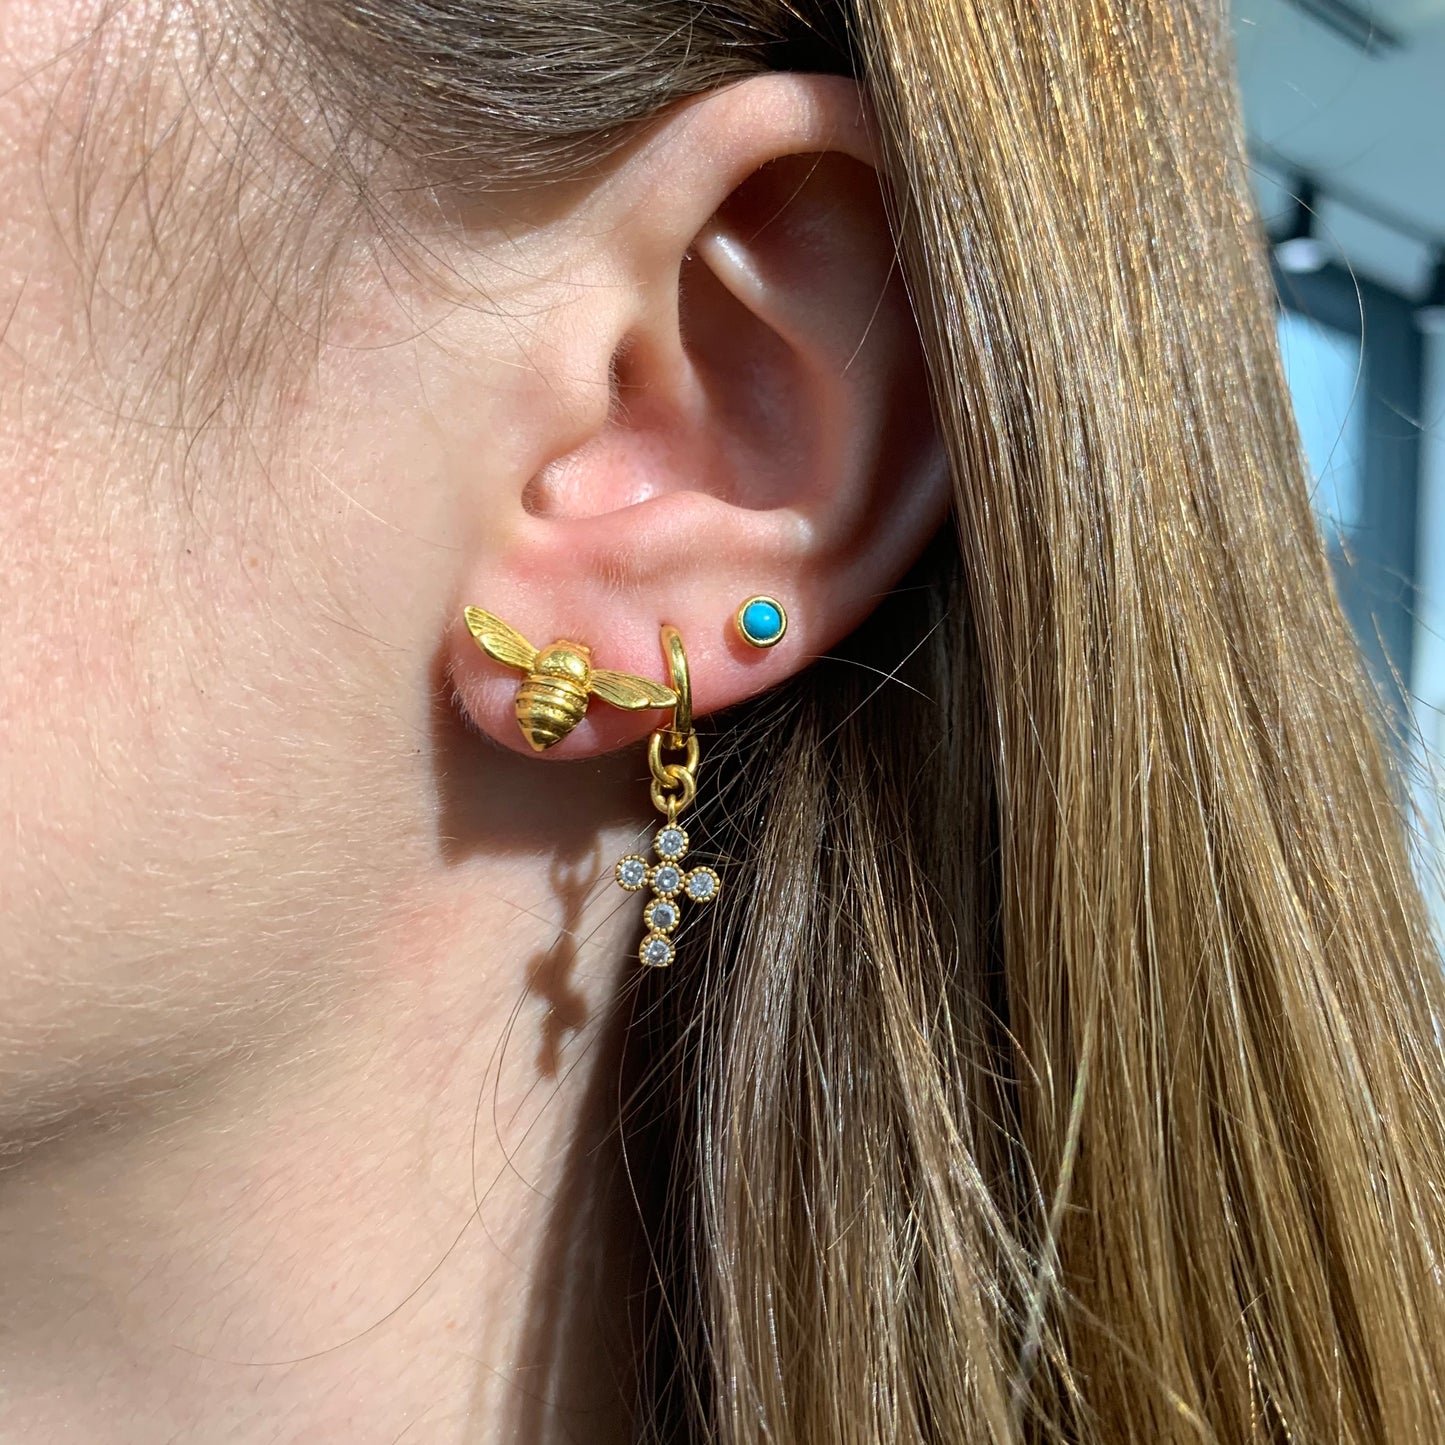 Single Amazonite stone earrings